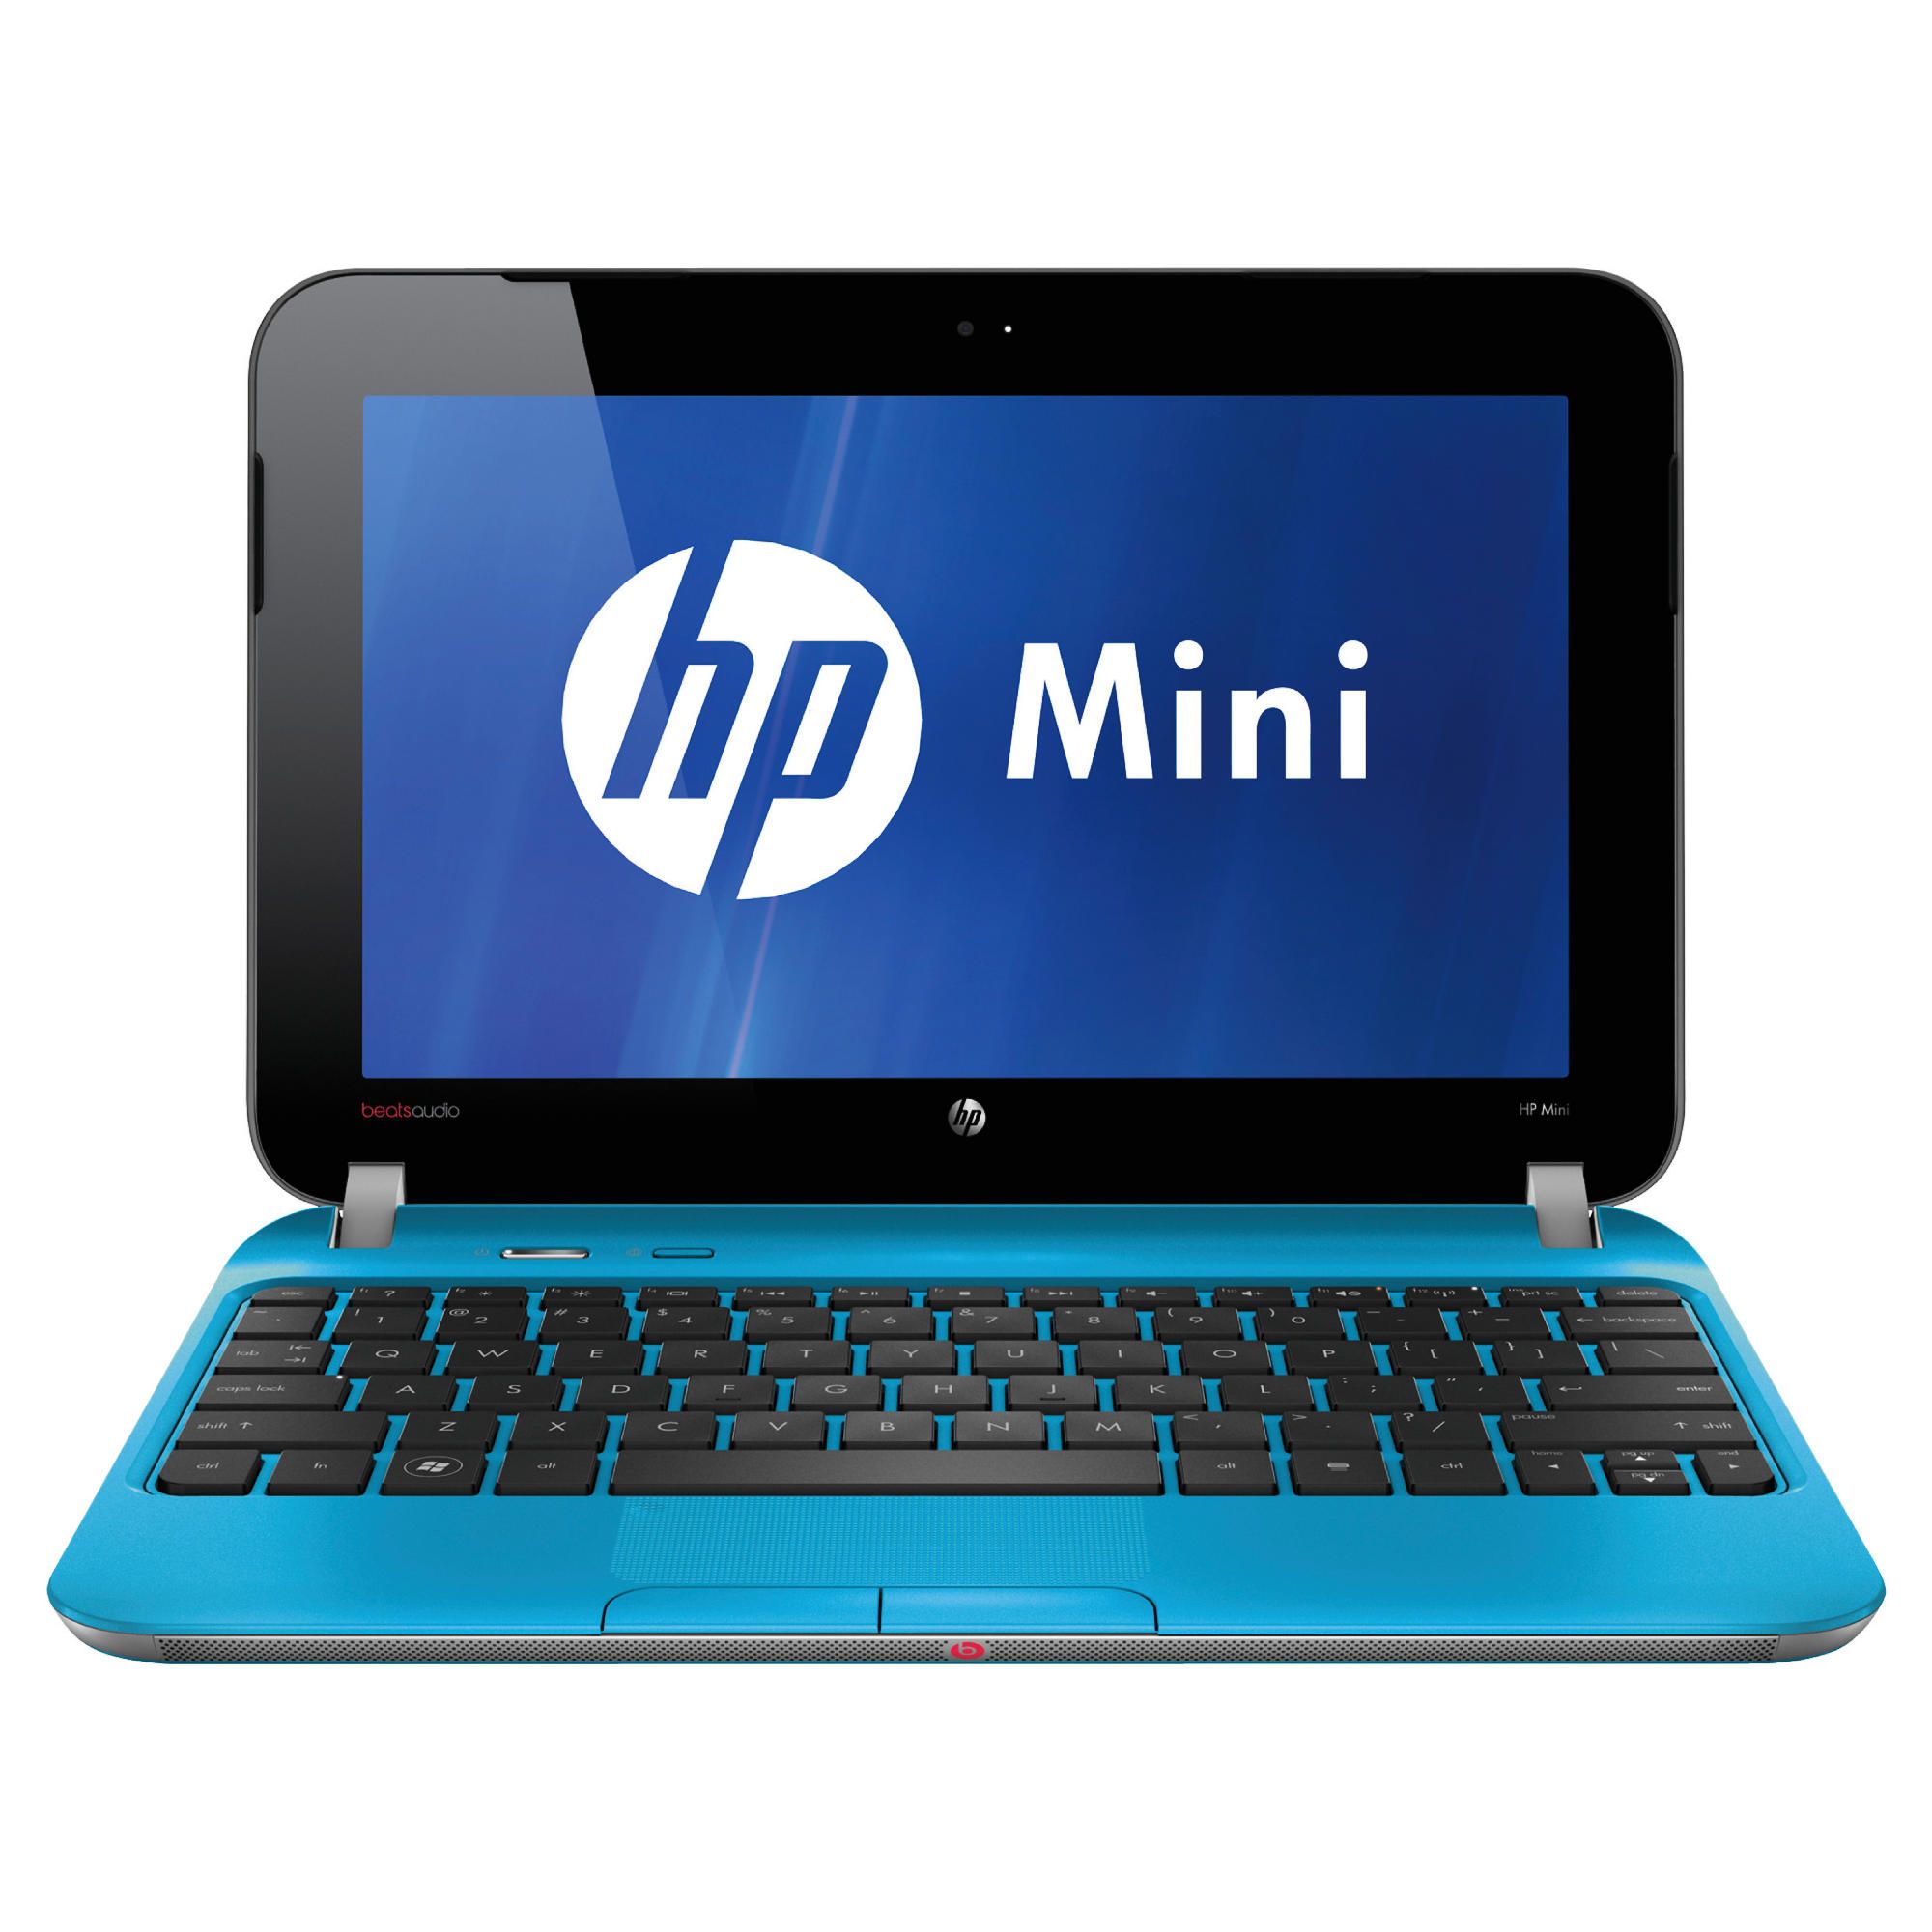 HP Mini 210-4121 Netbook (Intel Atom, 1GB, 320GB, 10.1'' Display) Blue at Tesco Direct